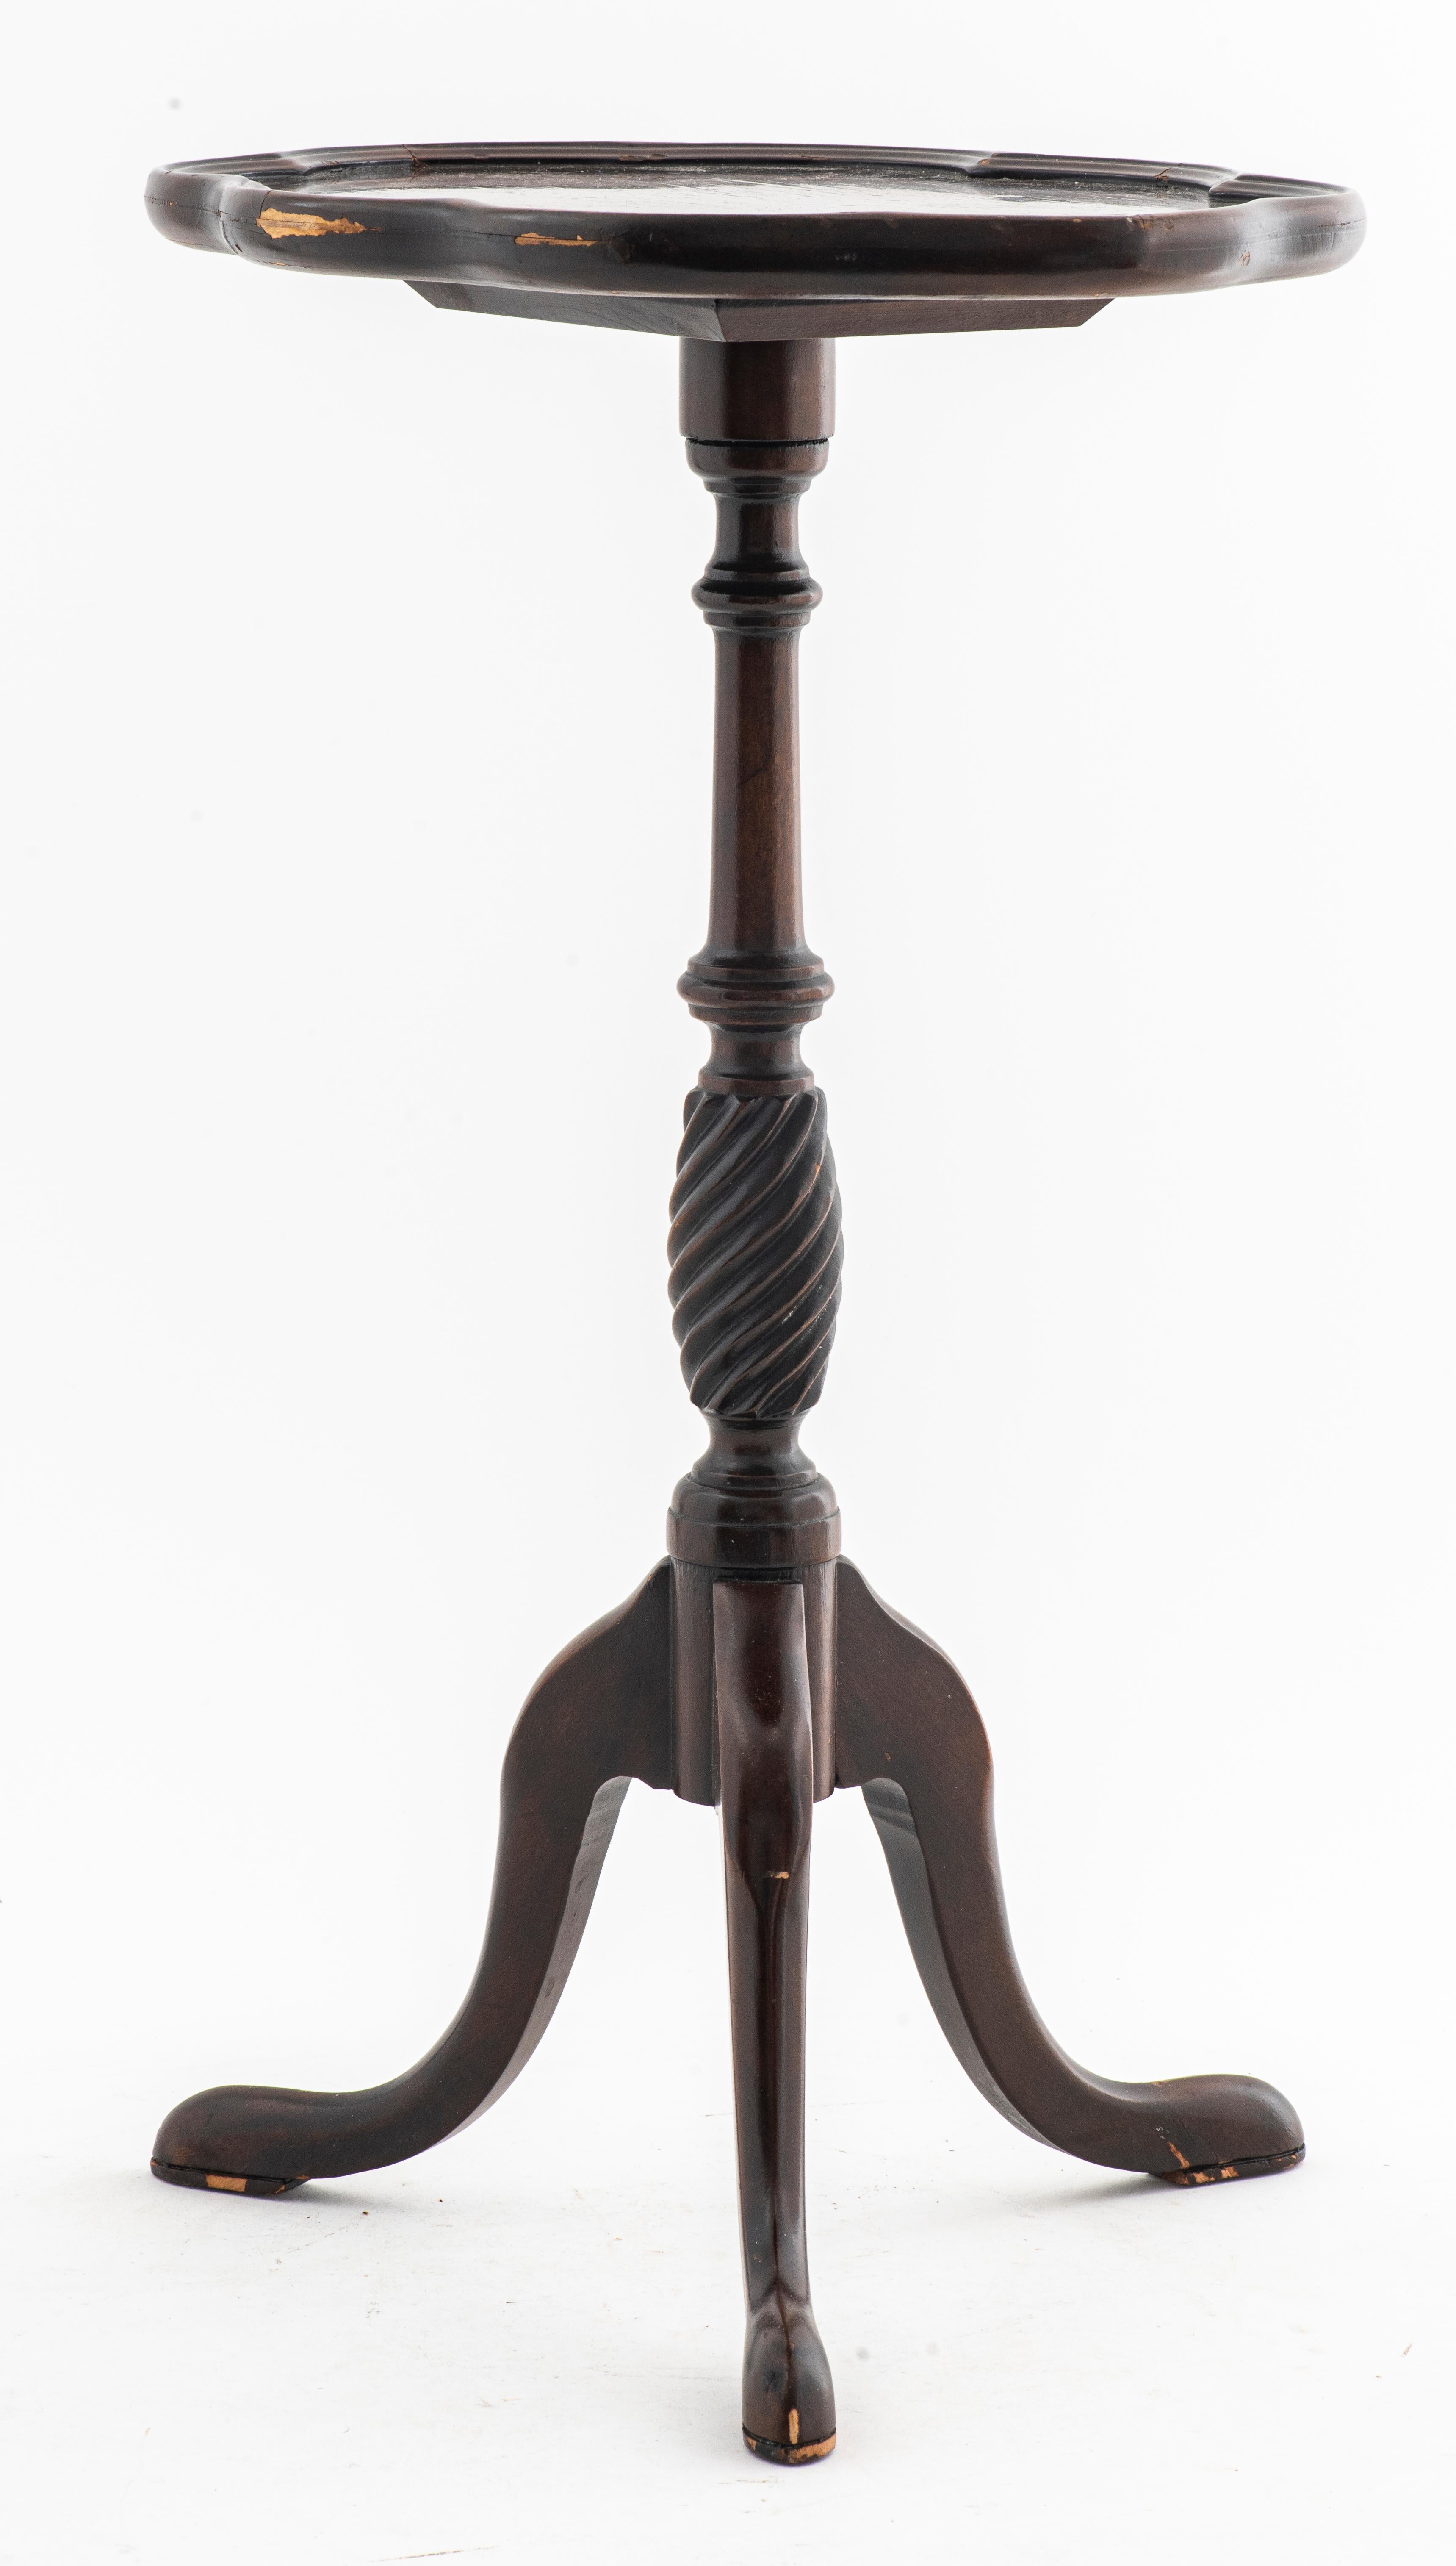 Brandt Queen Anne manner diminutive carved wood side table. 
Dimensions: 20.5